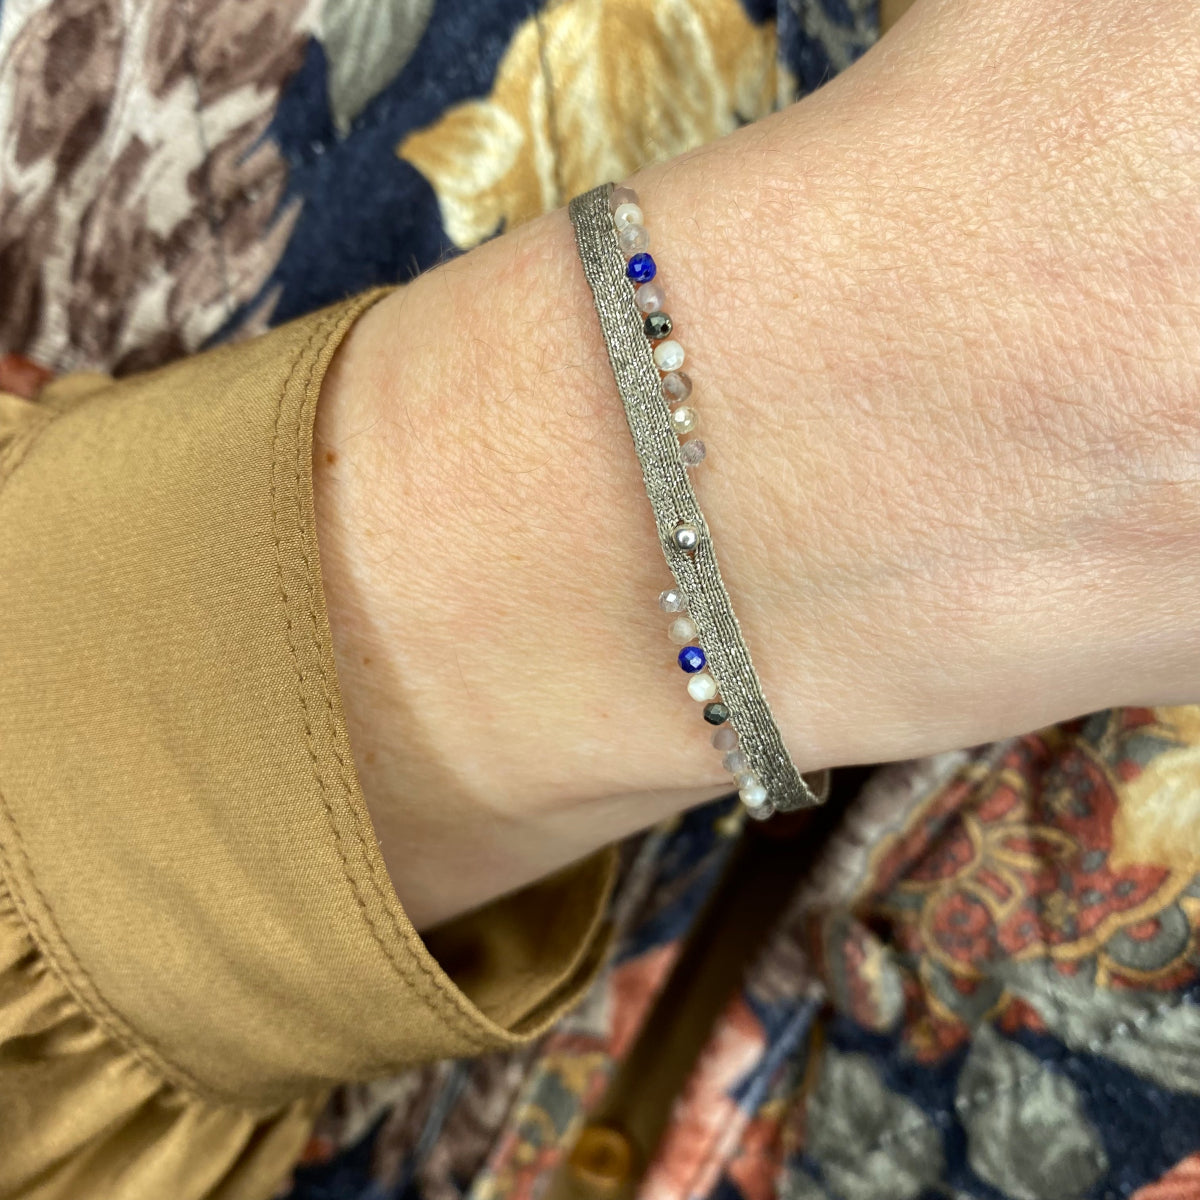  Intermixed semi-precious stones  - 925 sterling silver bead  - Handwoven using metallic threads  - Width 3mm  -Women bracelet  - Adjustable bracelet  -Can be worn in the  water